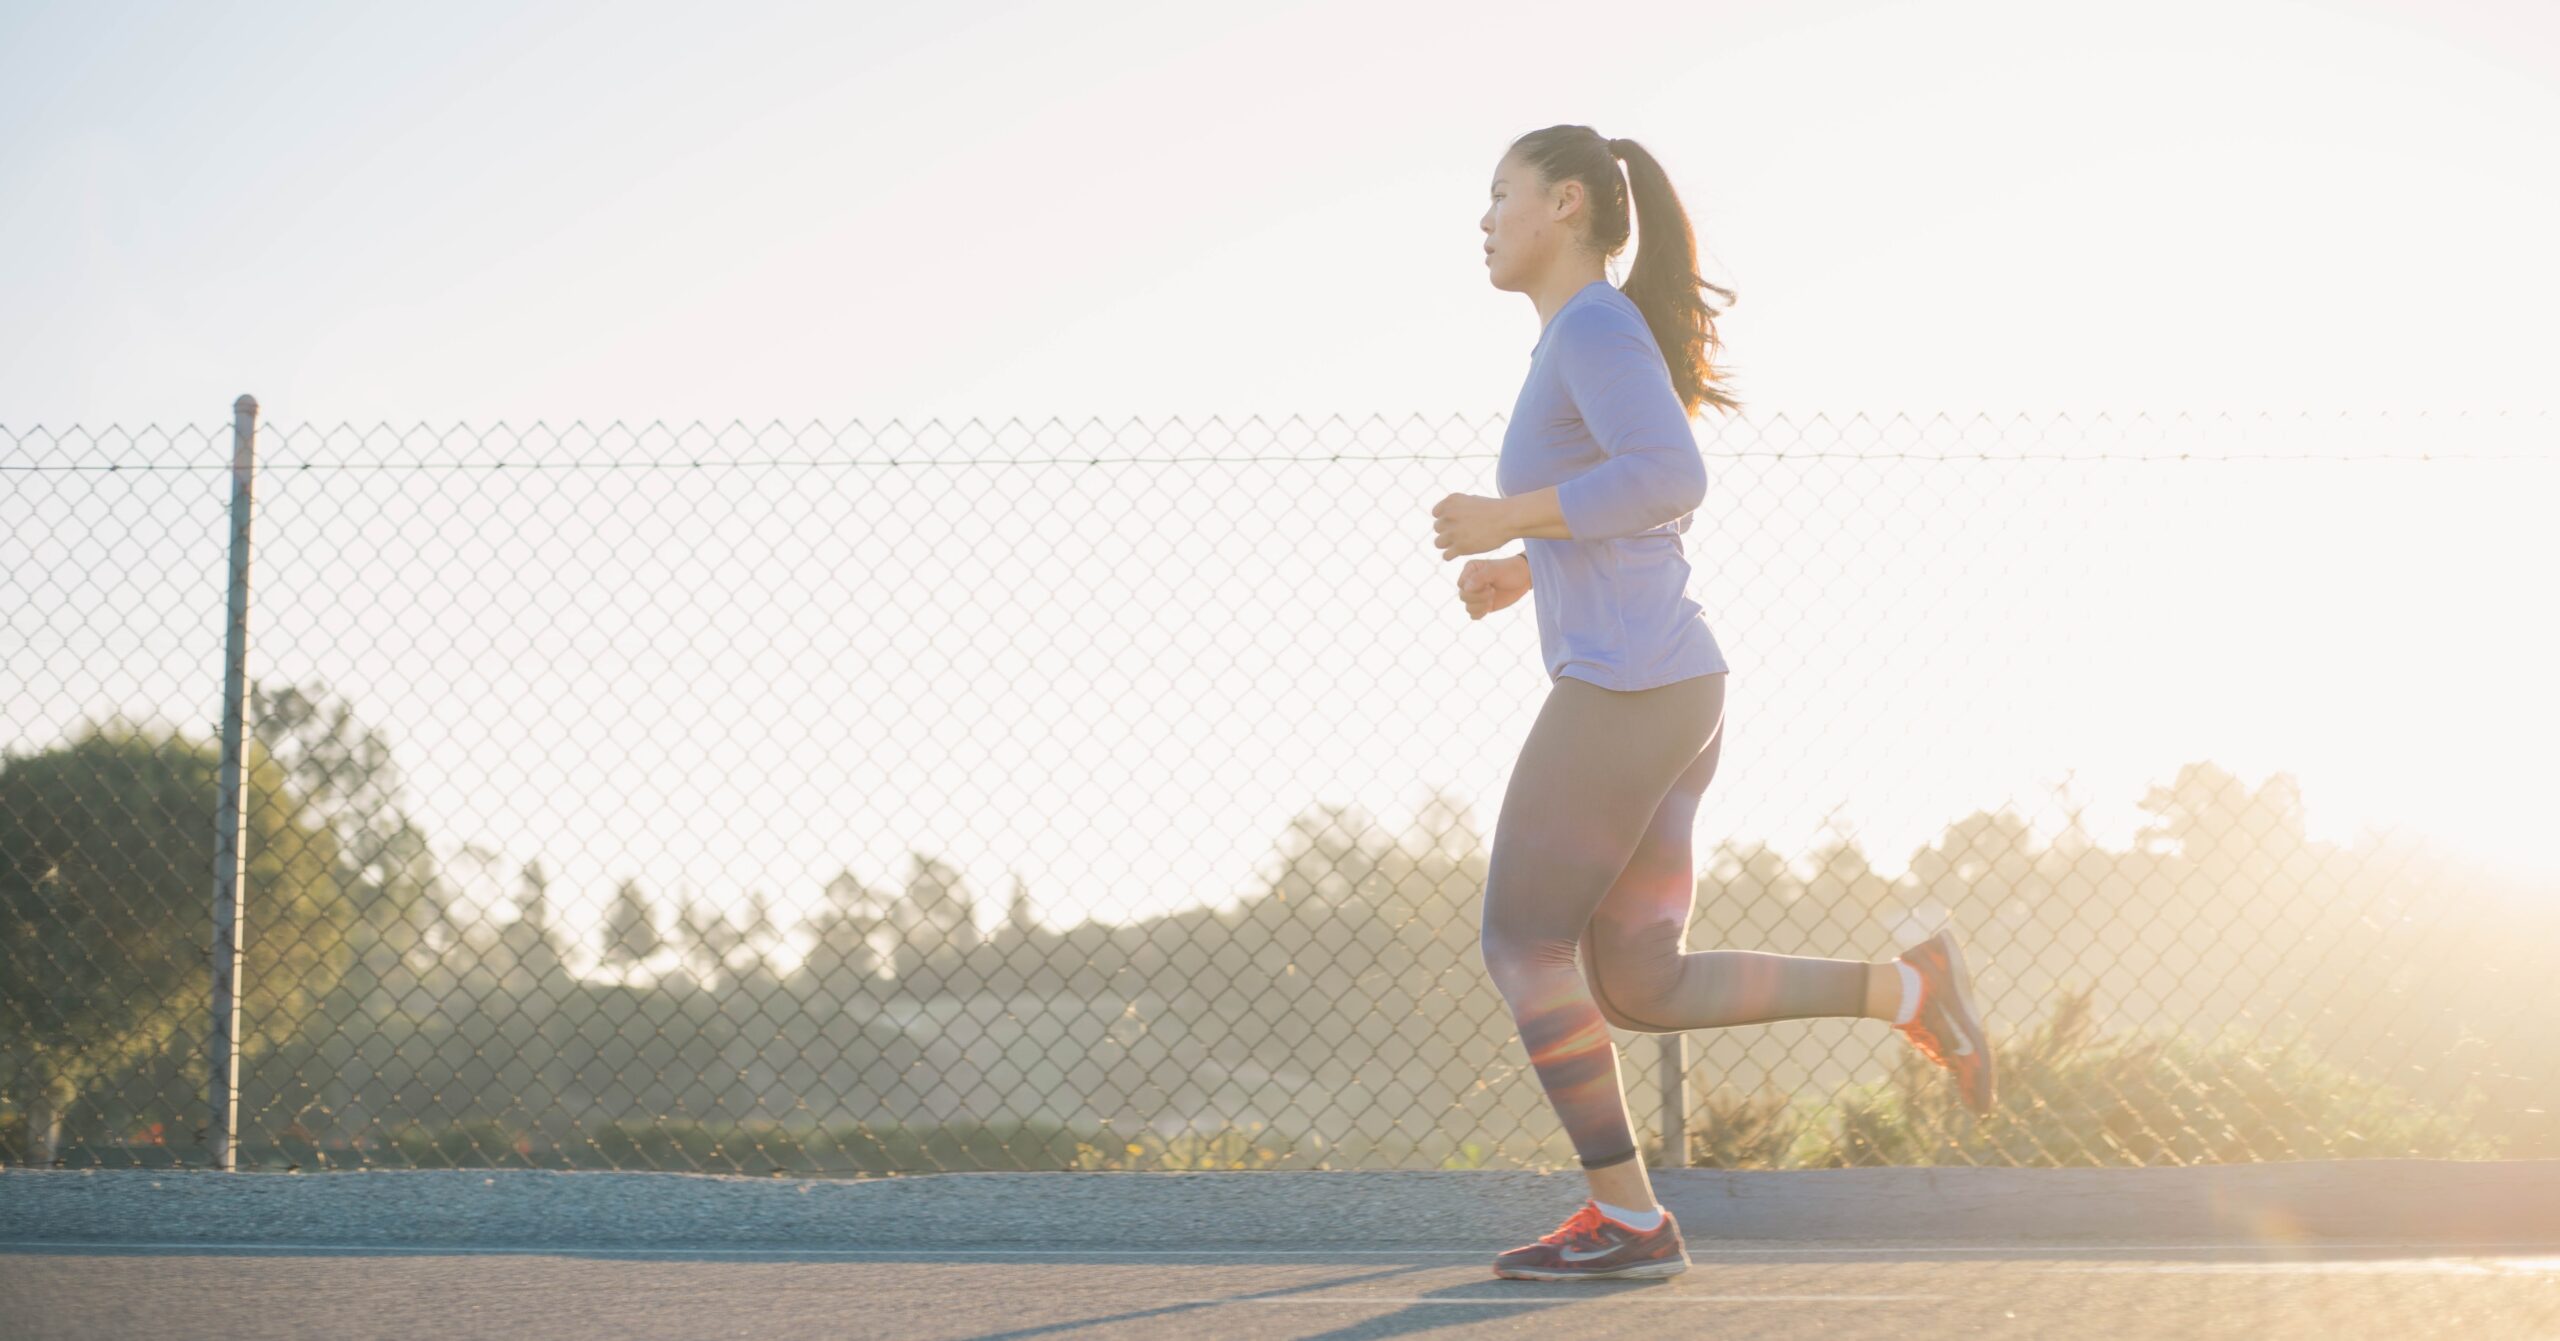 3 Sure Fire Ways To Power Up Your Marathon Training